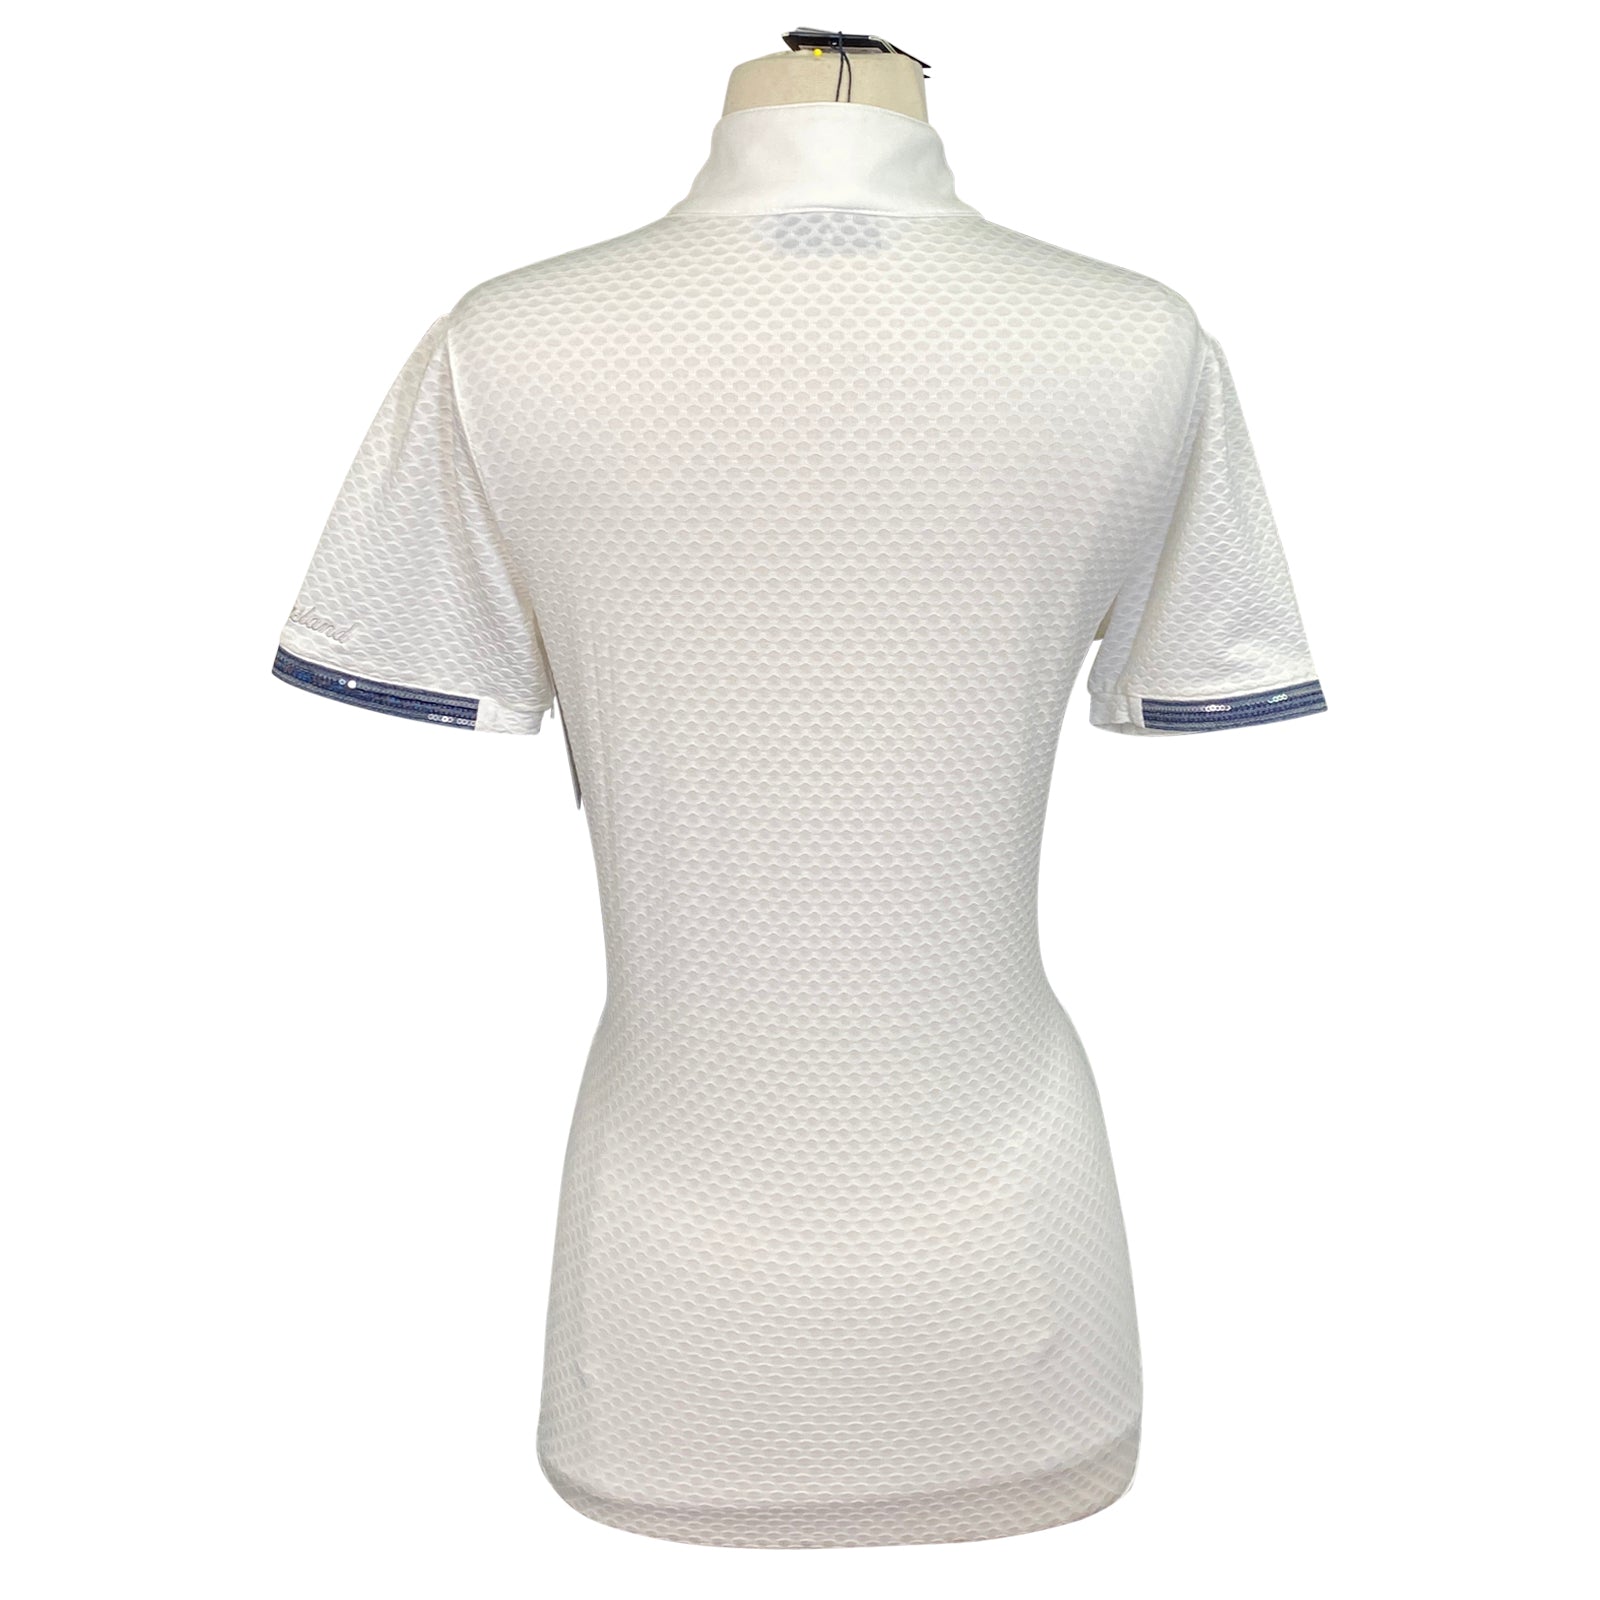 Kingsland 'Marola' Show Shirt in White